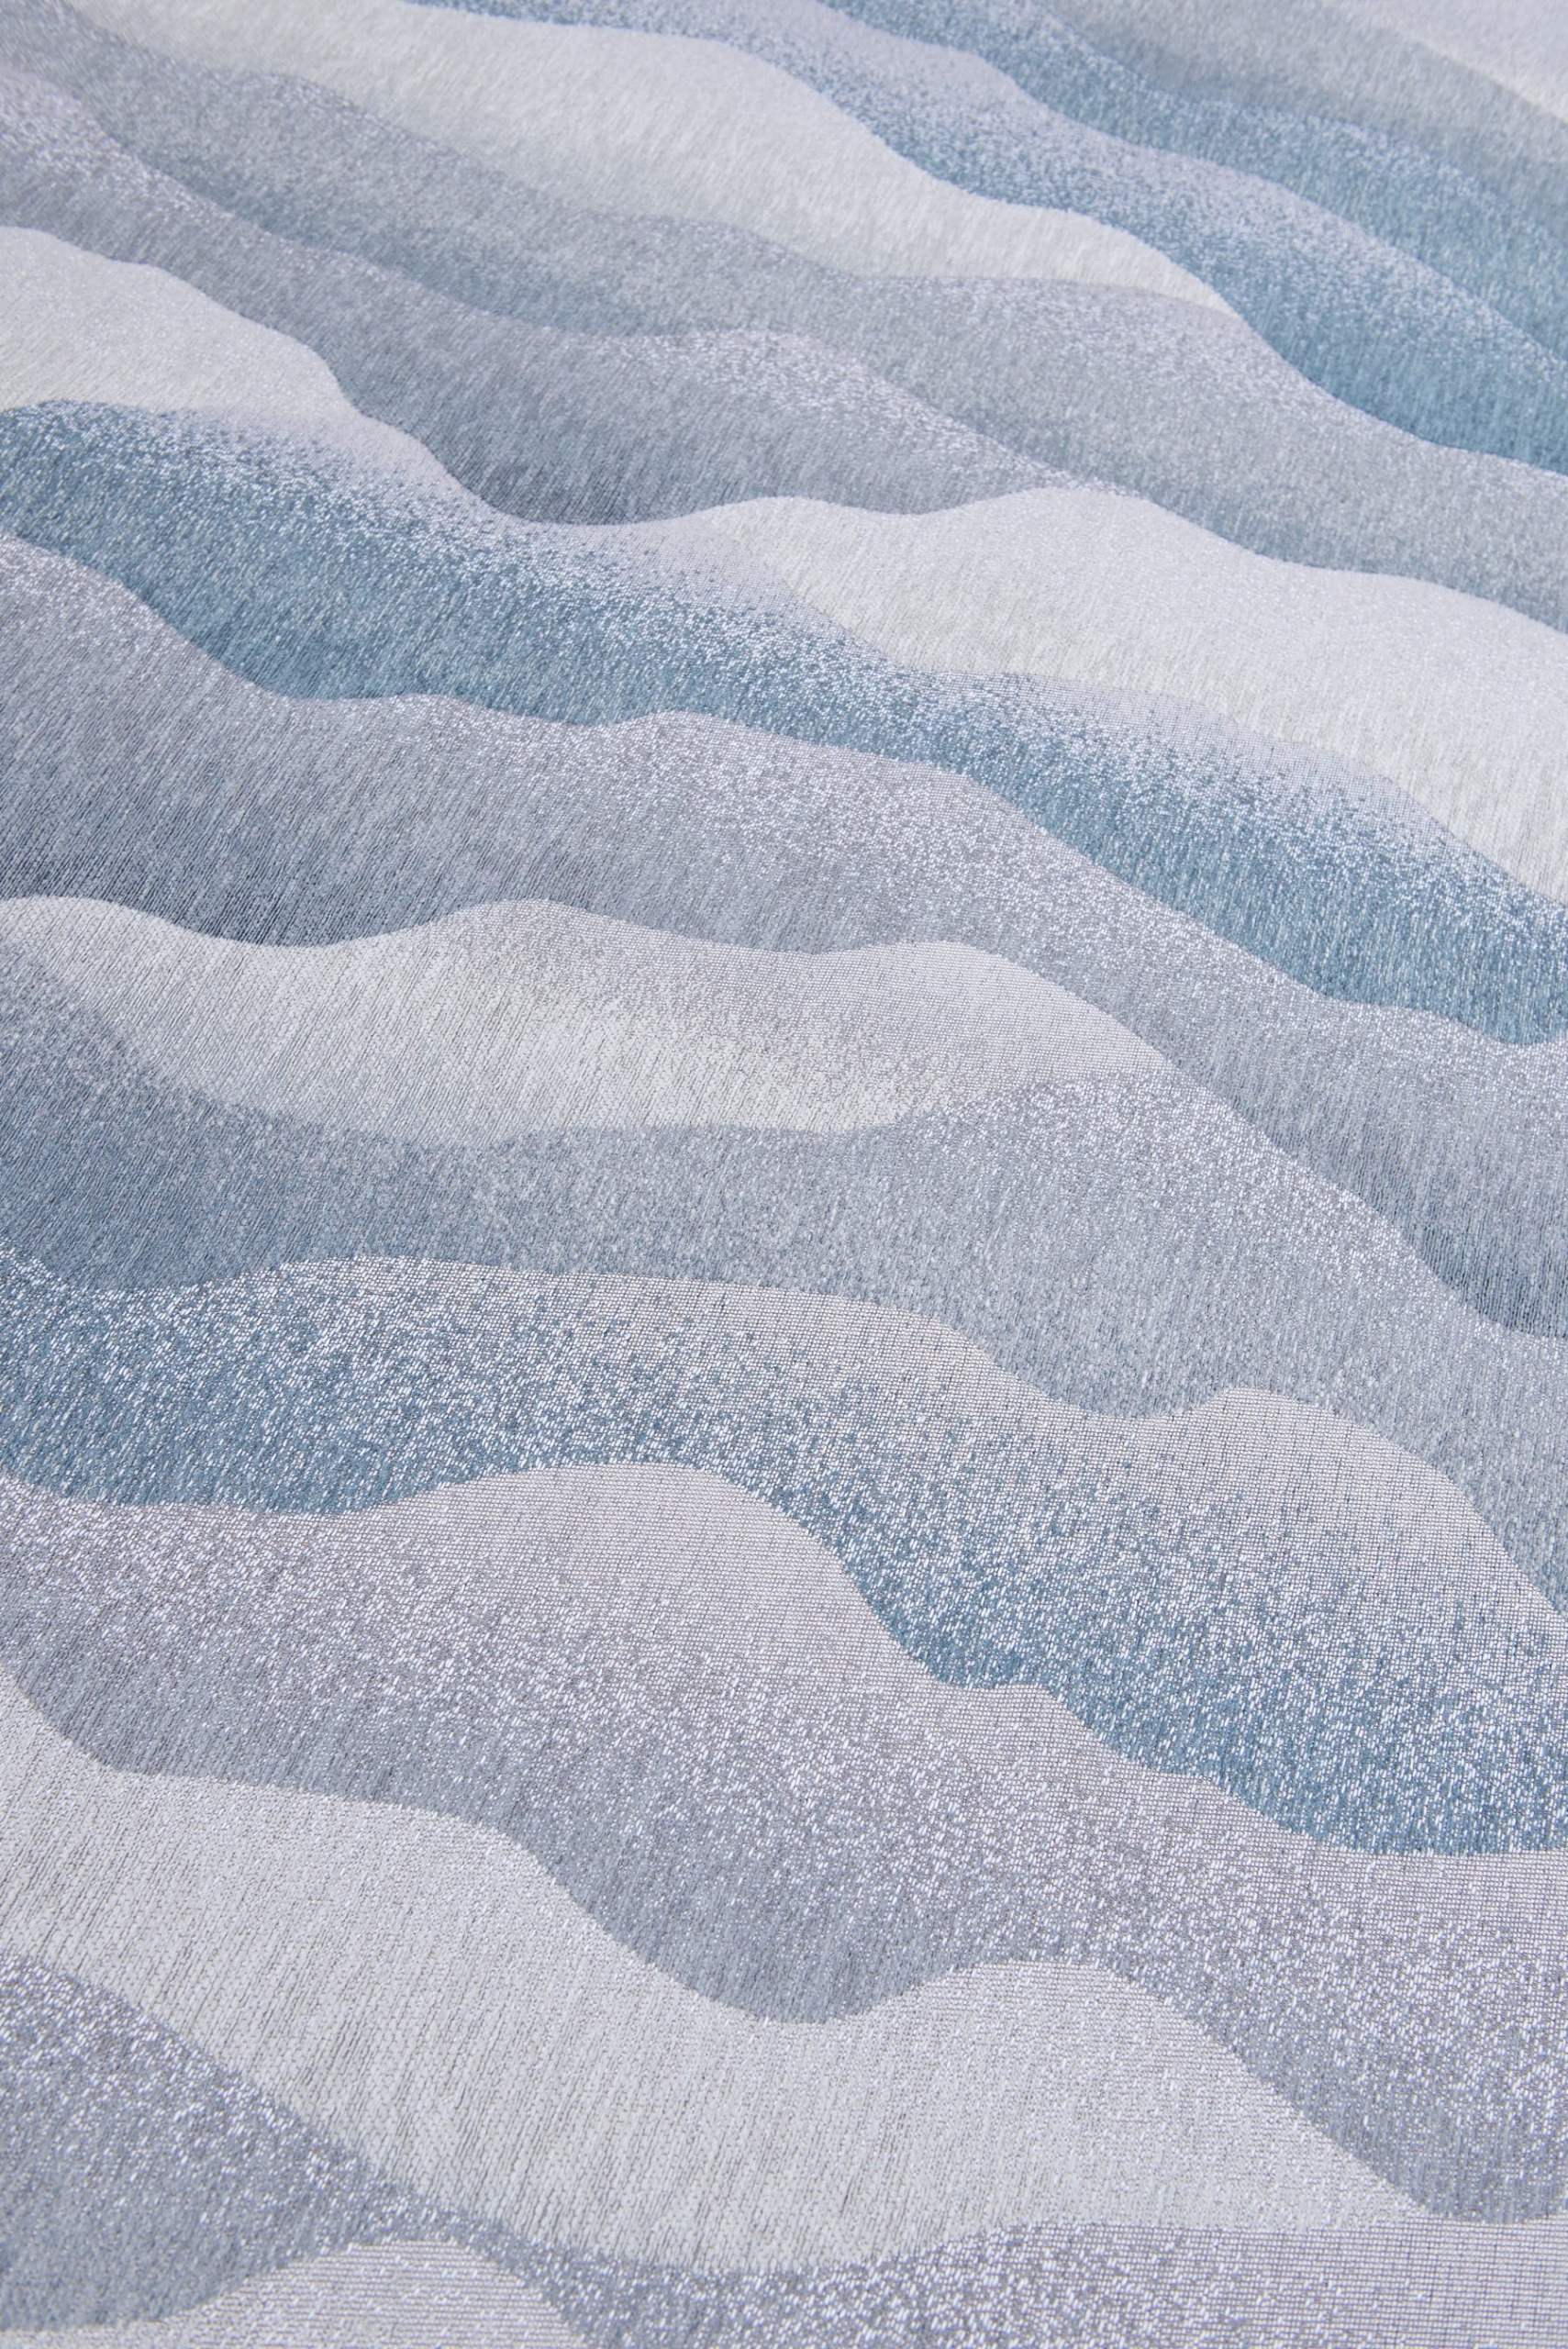 Gallery Collection Himalaya Winter 9382 rug by Louis De Poortere